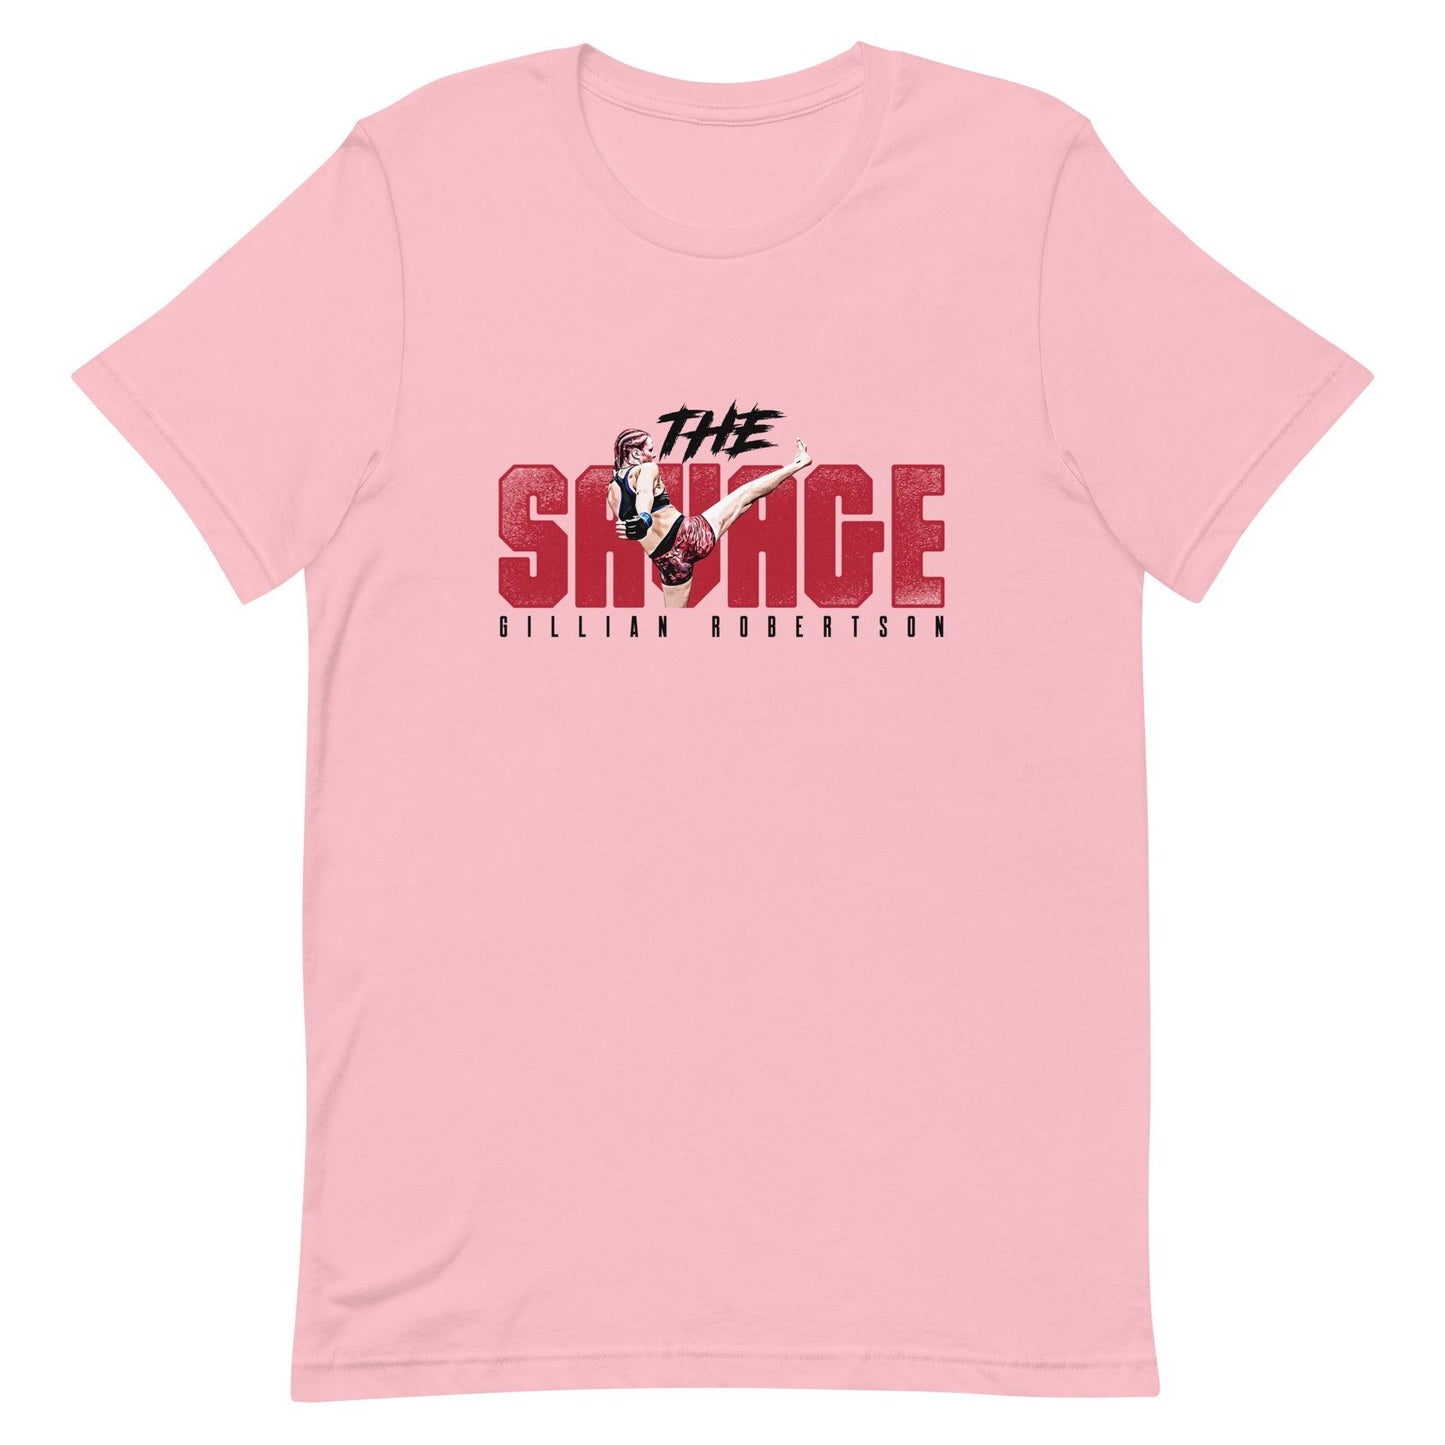 Gillian Robertson "The Savage" t-shirt - Fan Arch